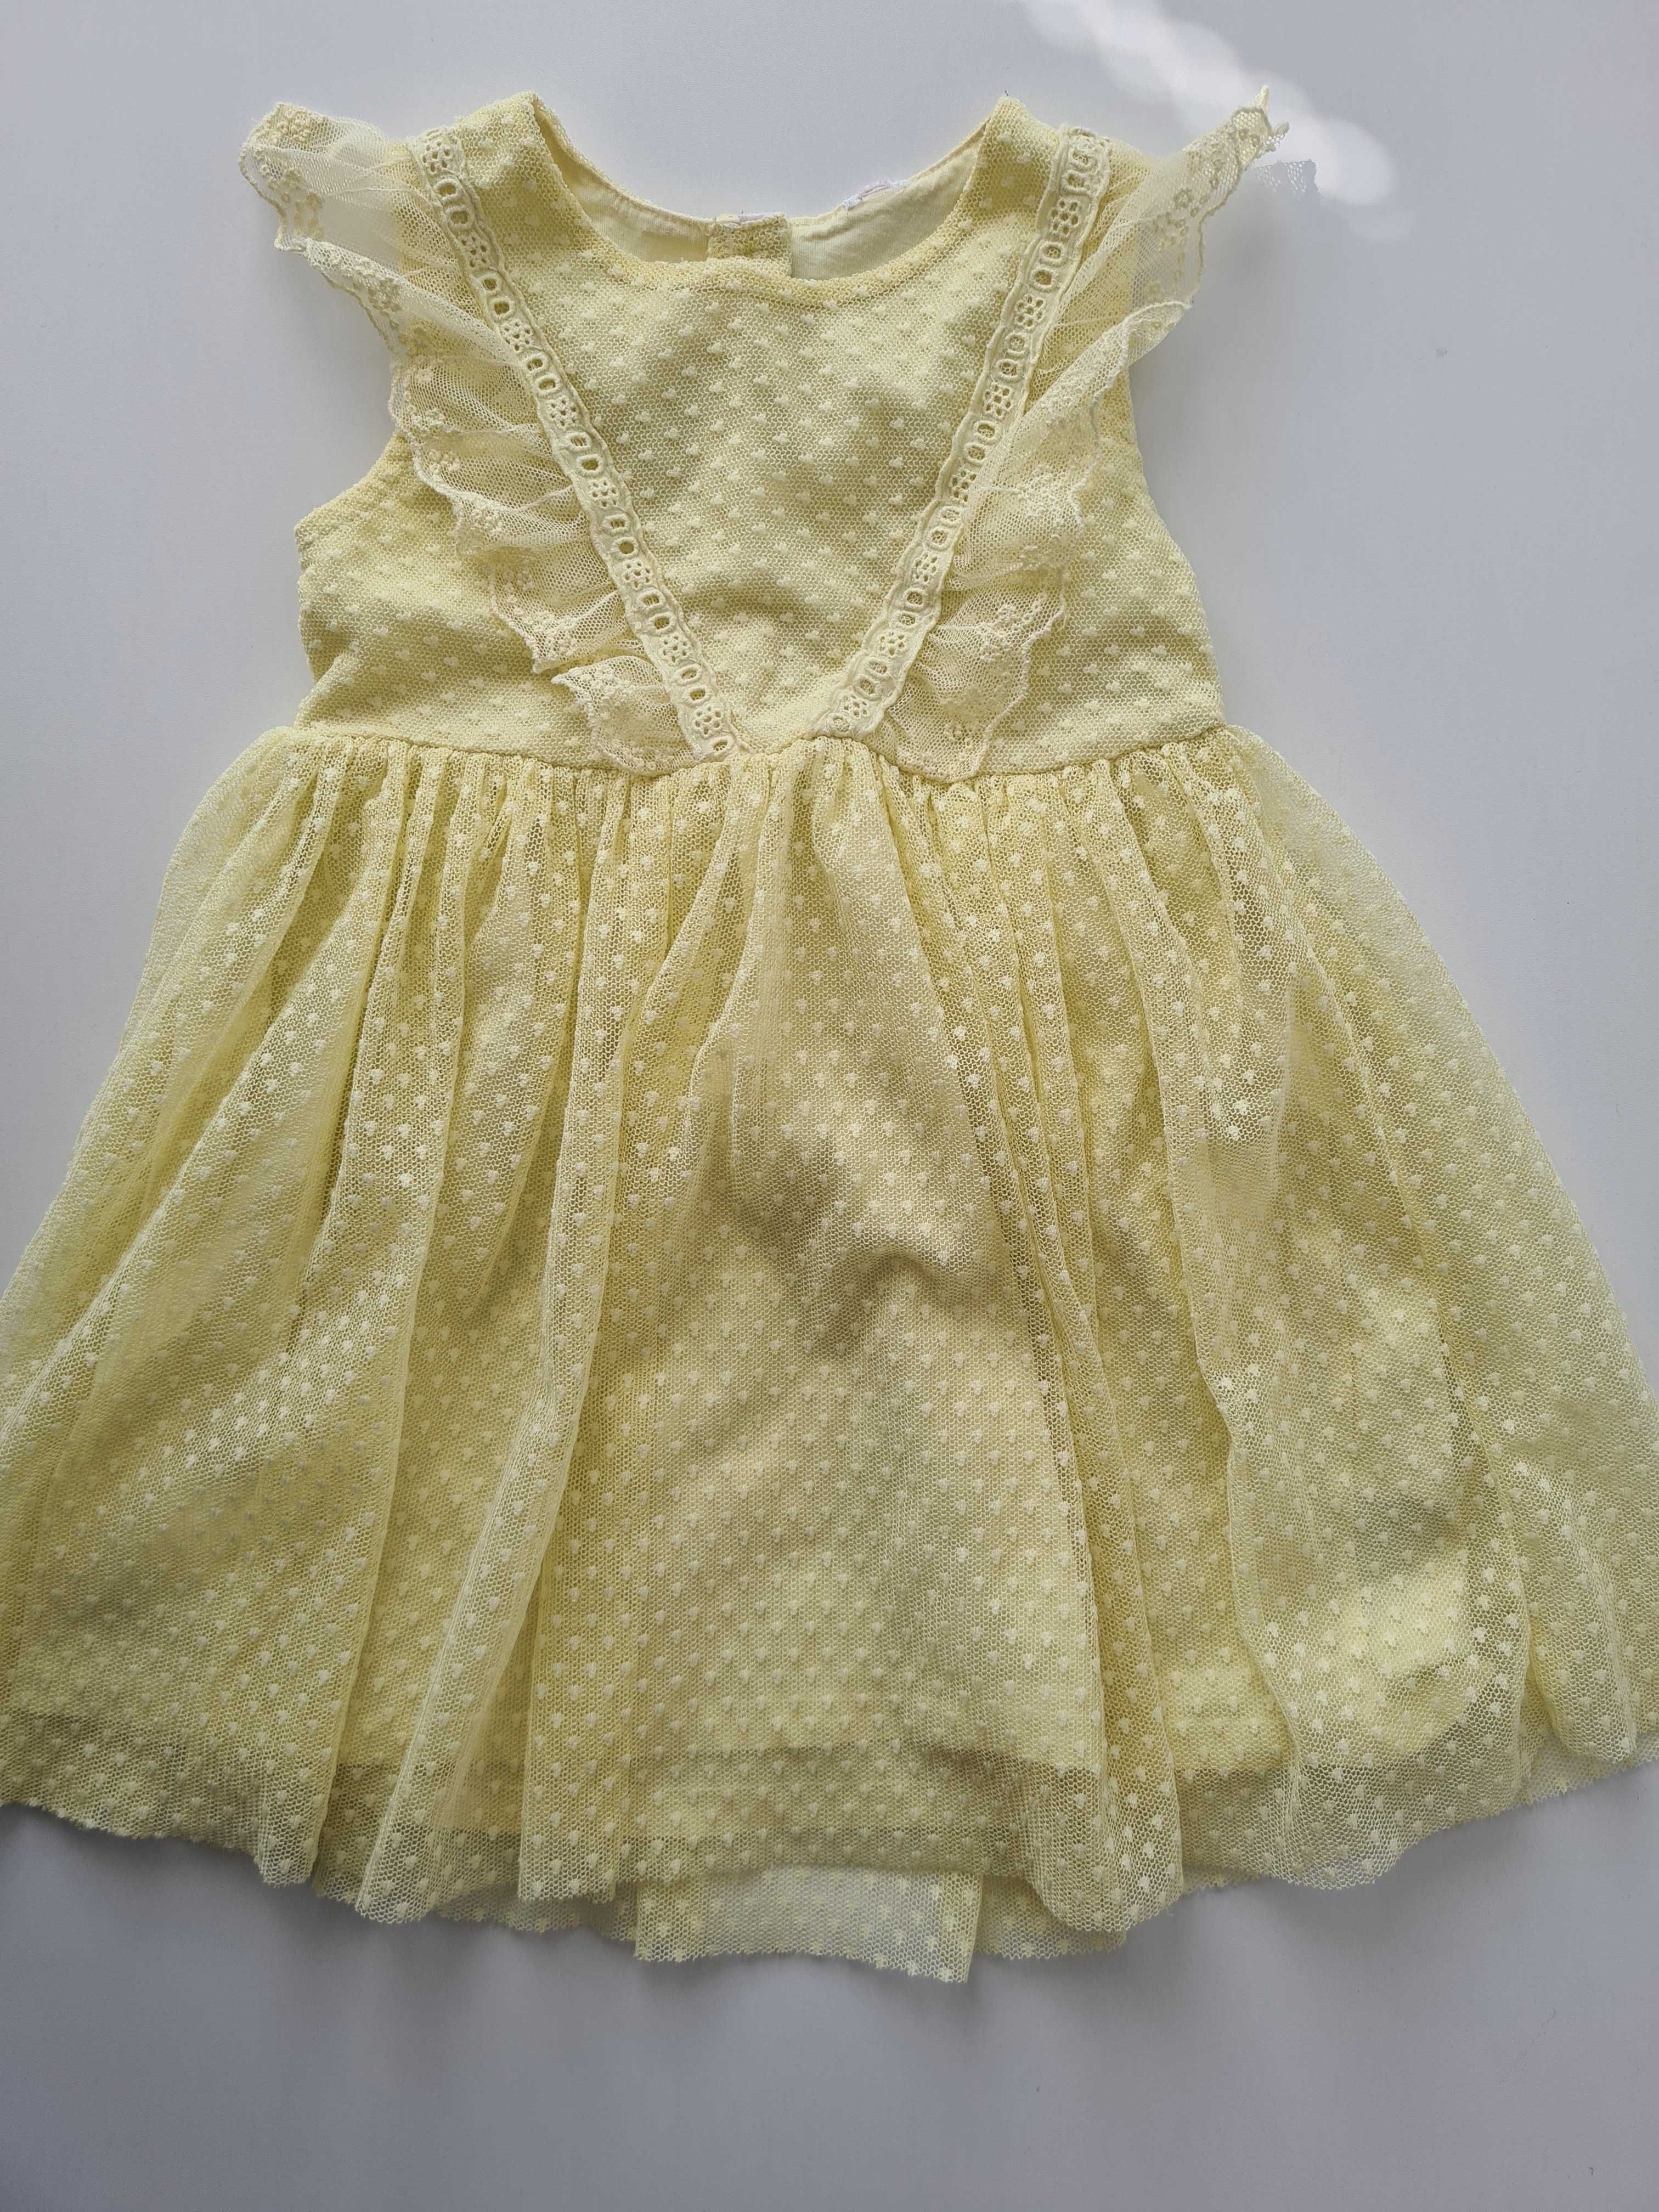 Детски рокли Petit bateau, Ralph Lauren, LC Waikiki 2-5 години